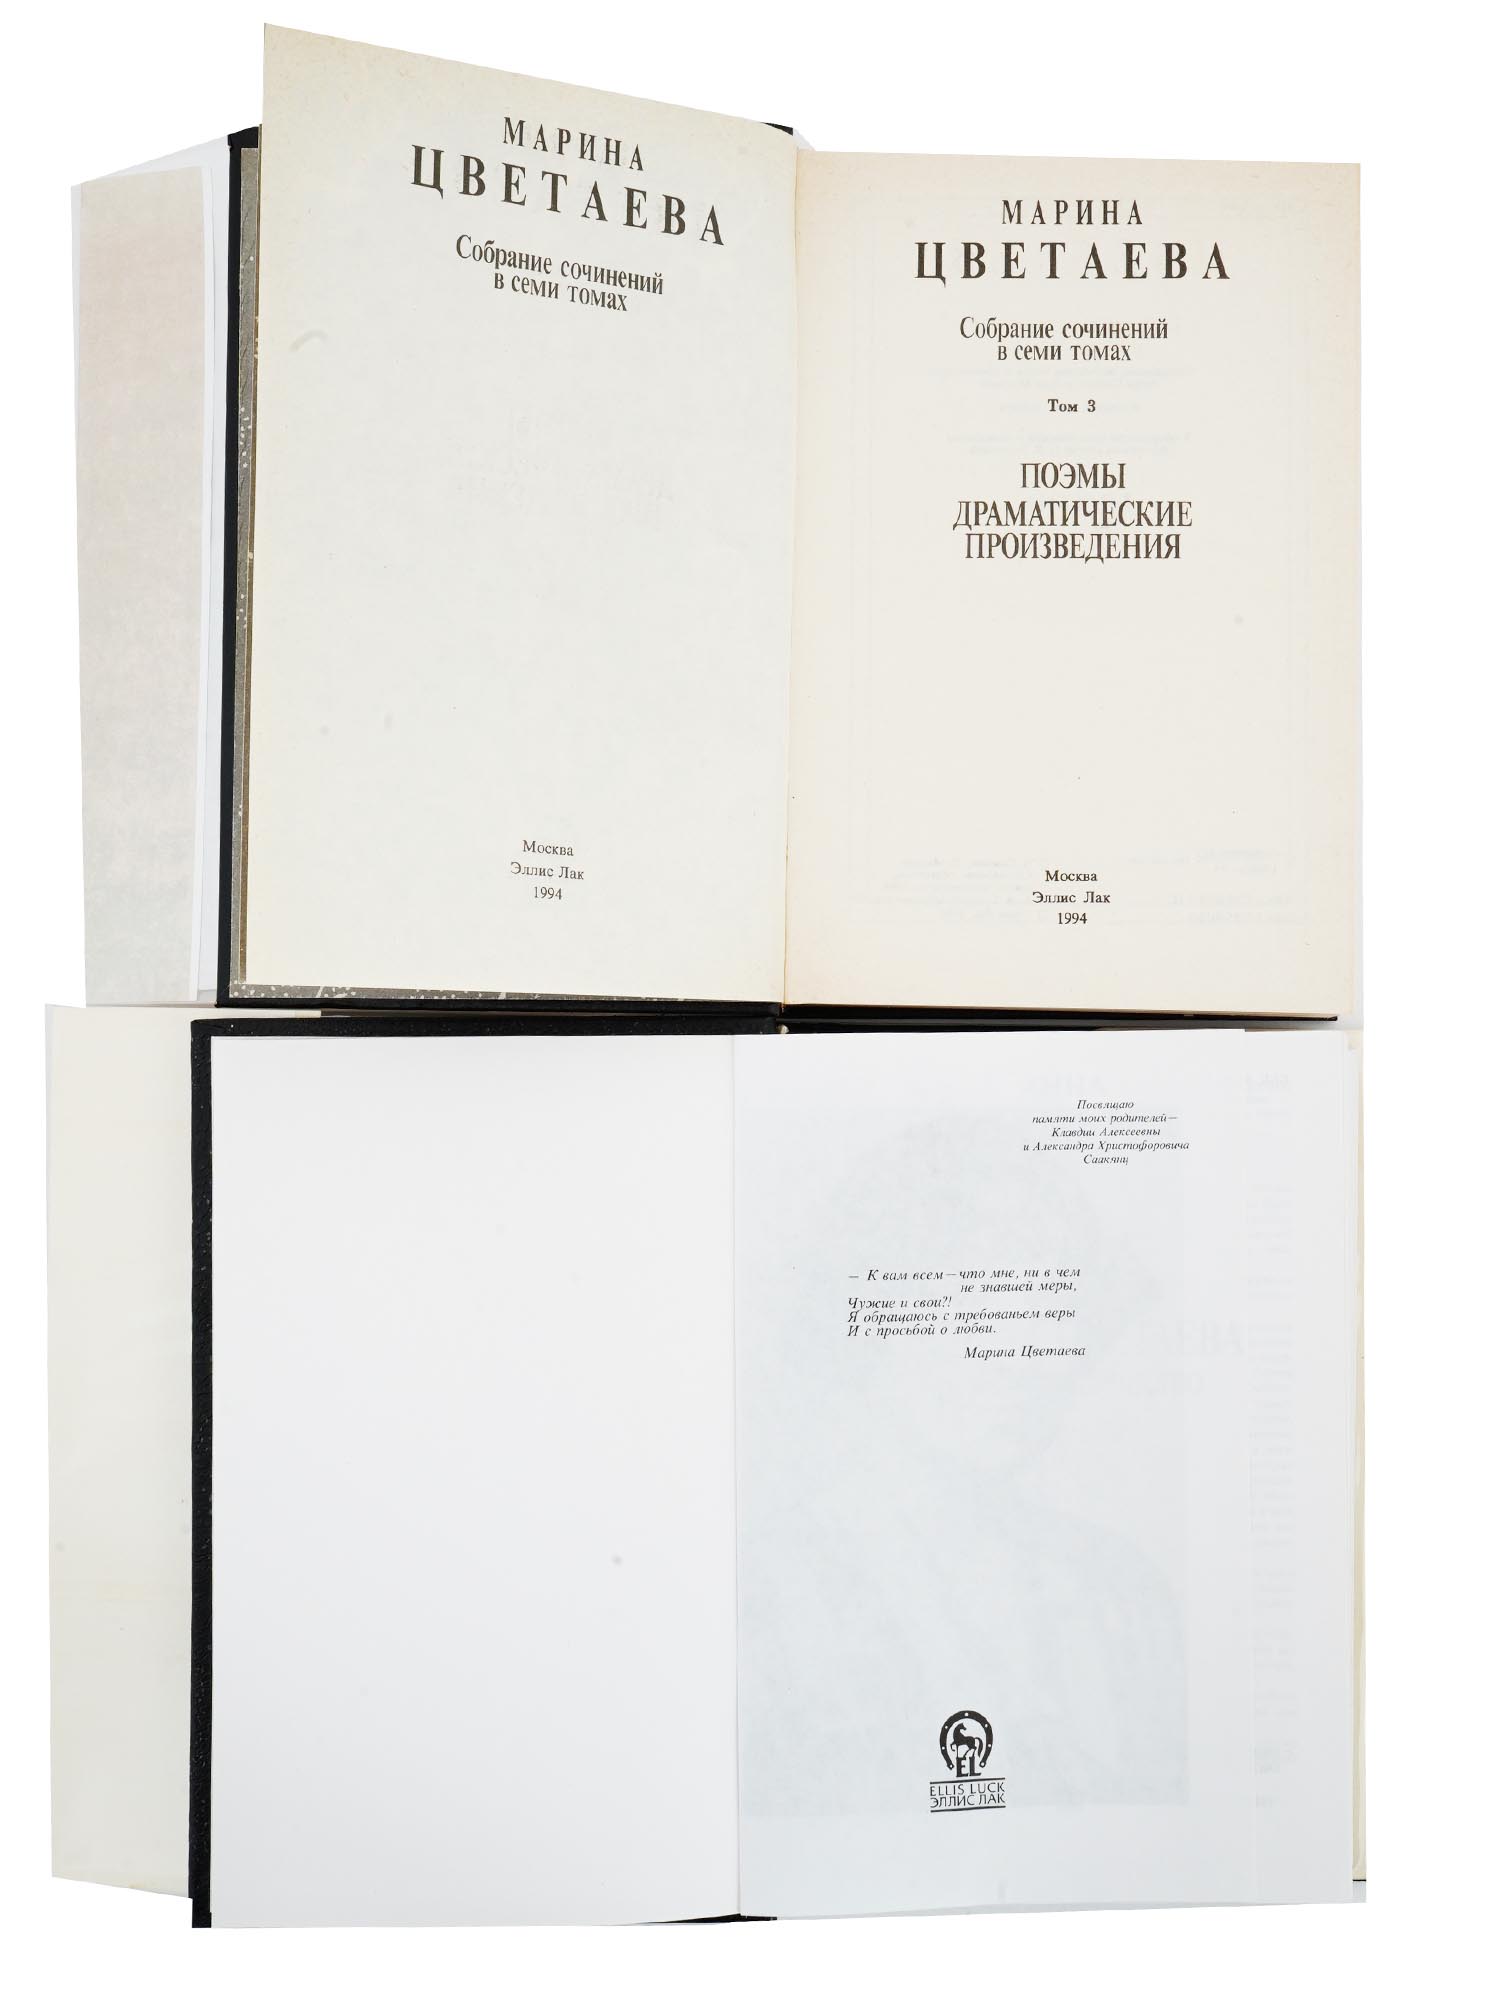 RUSSIAN BOOKS COMPLETE WORKS OF MARINA TSVETAEVA PIC-7